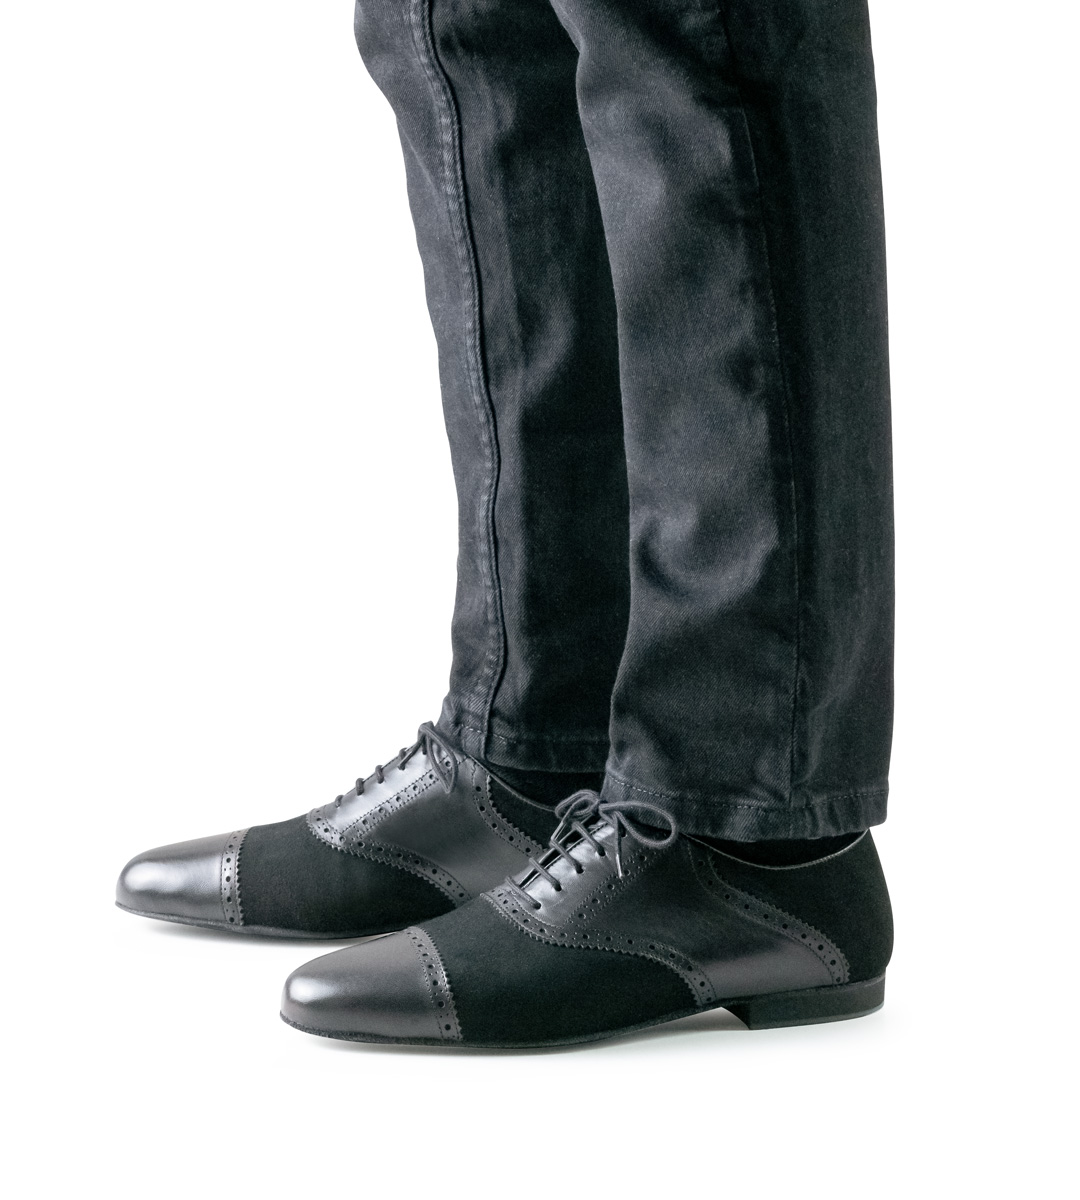 black men's dance shoe with micro heel in combination with black jeans